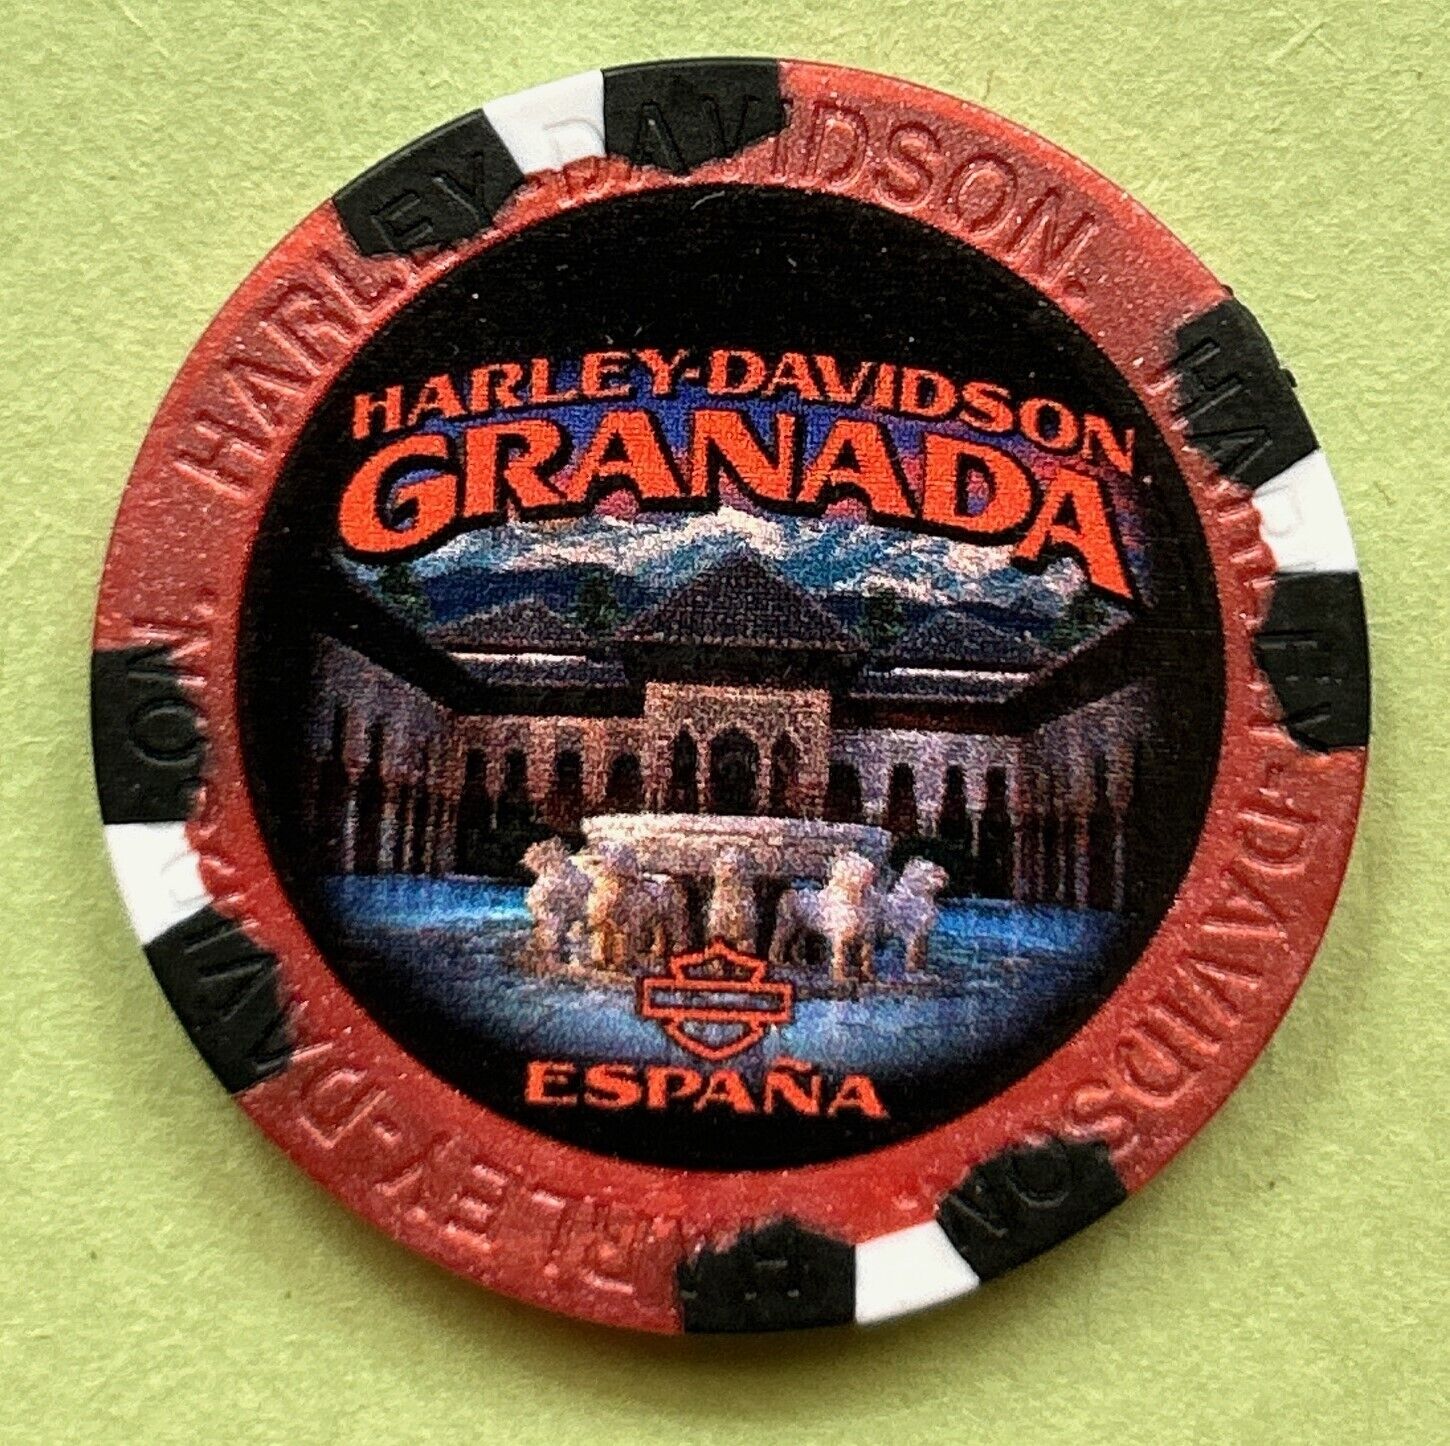 Harley Davidson Wide Poker Chip from HD Granada in Granada, Spain